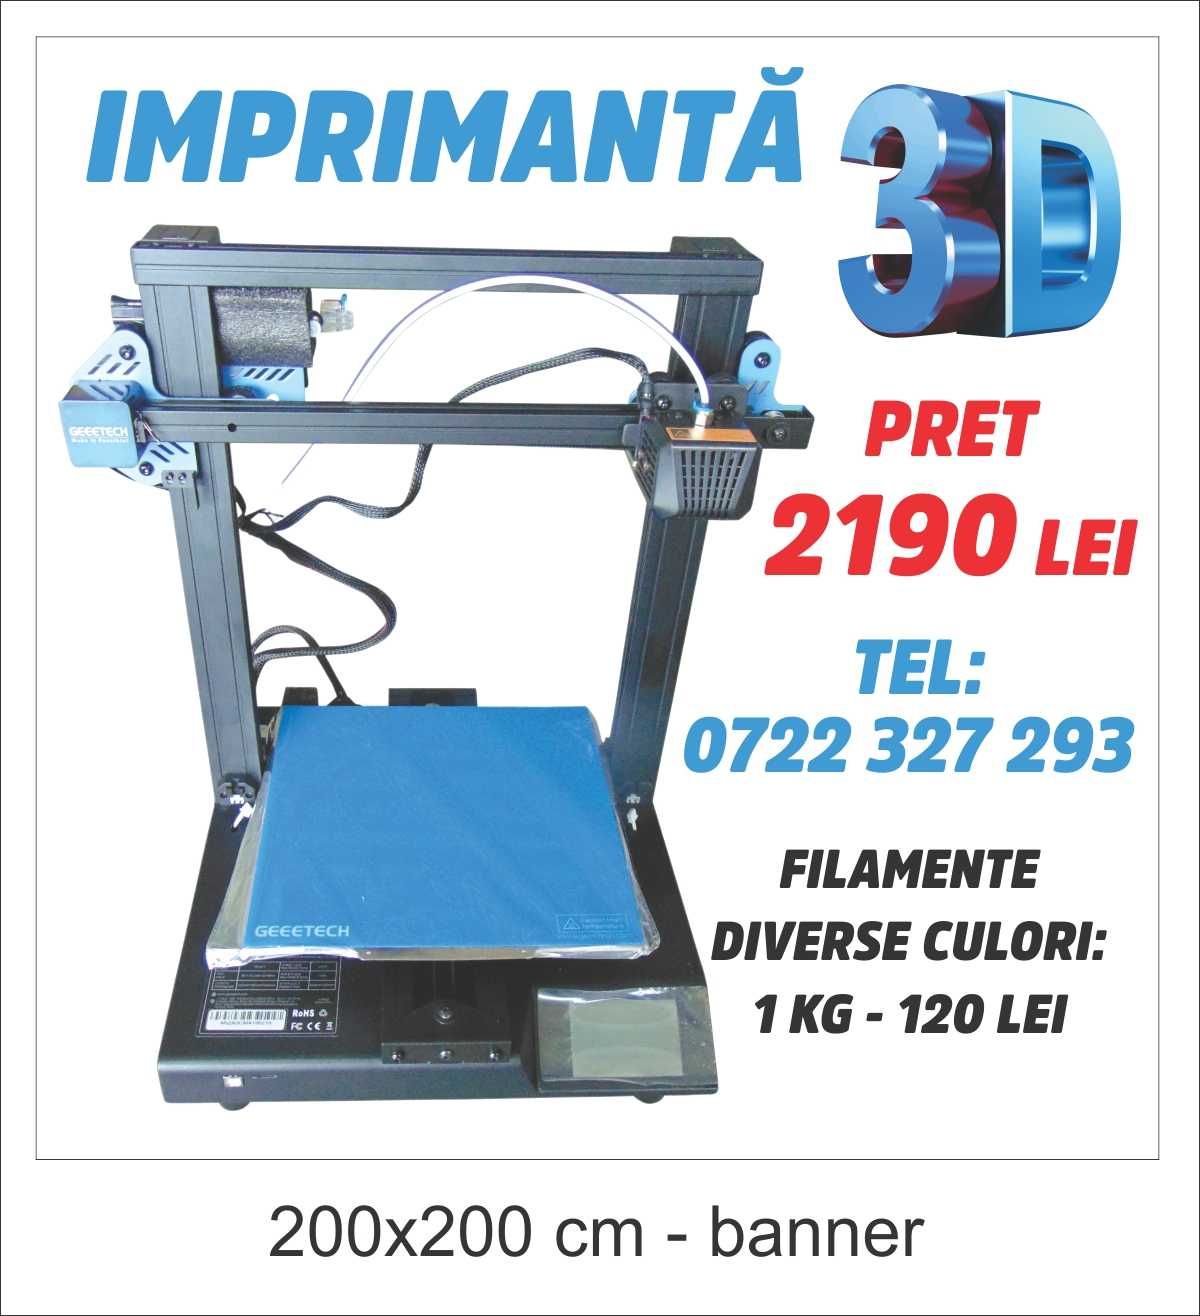 Imprimanta 3 D Profesionala si Filamente